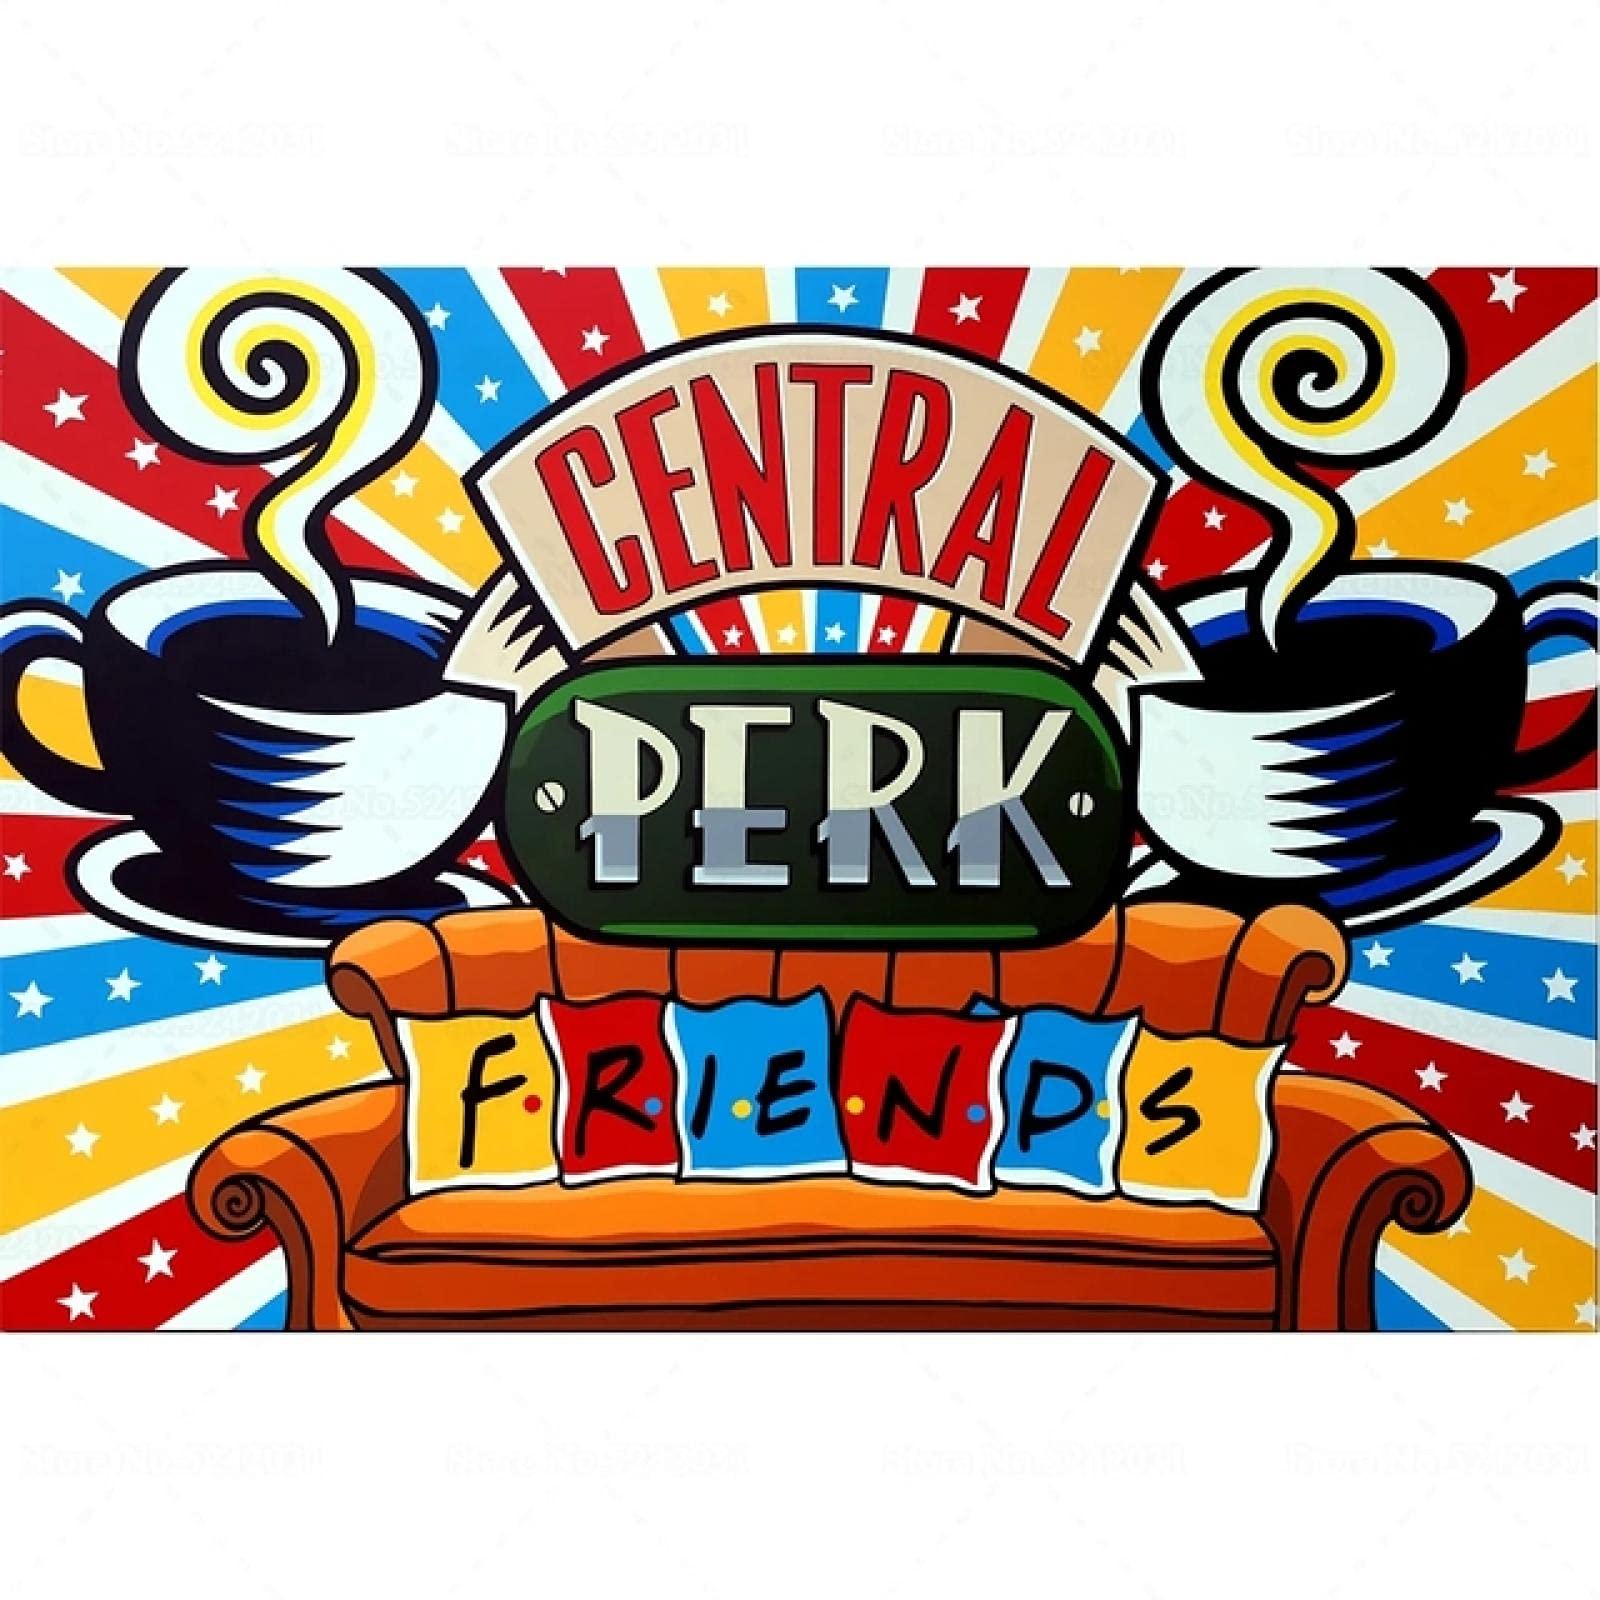 Fashion Central Perk Cafe Leinwand Gemälde US Friends TV Show Central Perk Print Poster Wandkunst Bild für Wohnkultur 70x90cm (28x35in) Rahmenlos